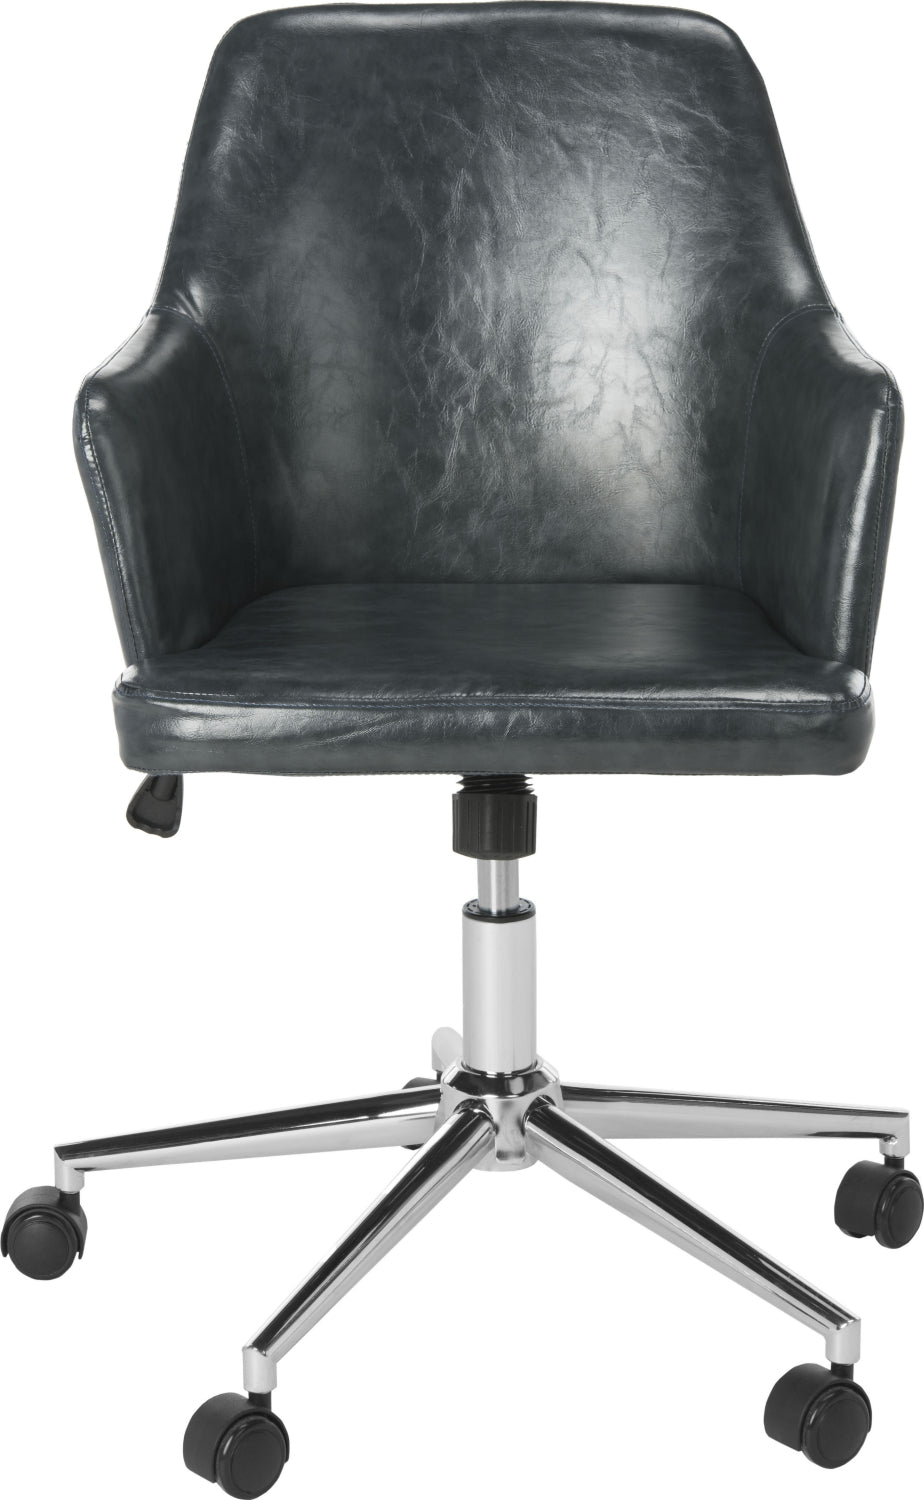 Safavieh Cadence Swivel Office Chair Dark Grey and Chrome Furniture main image